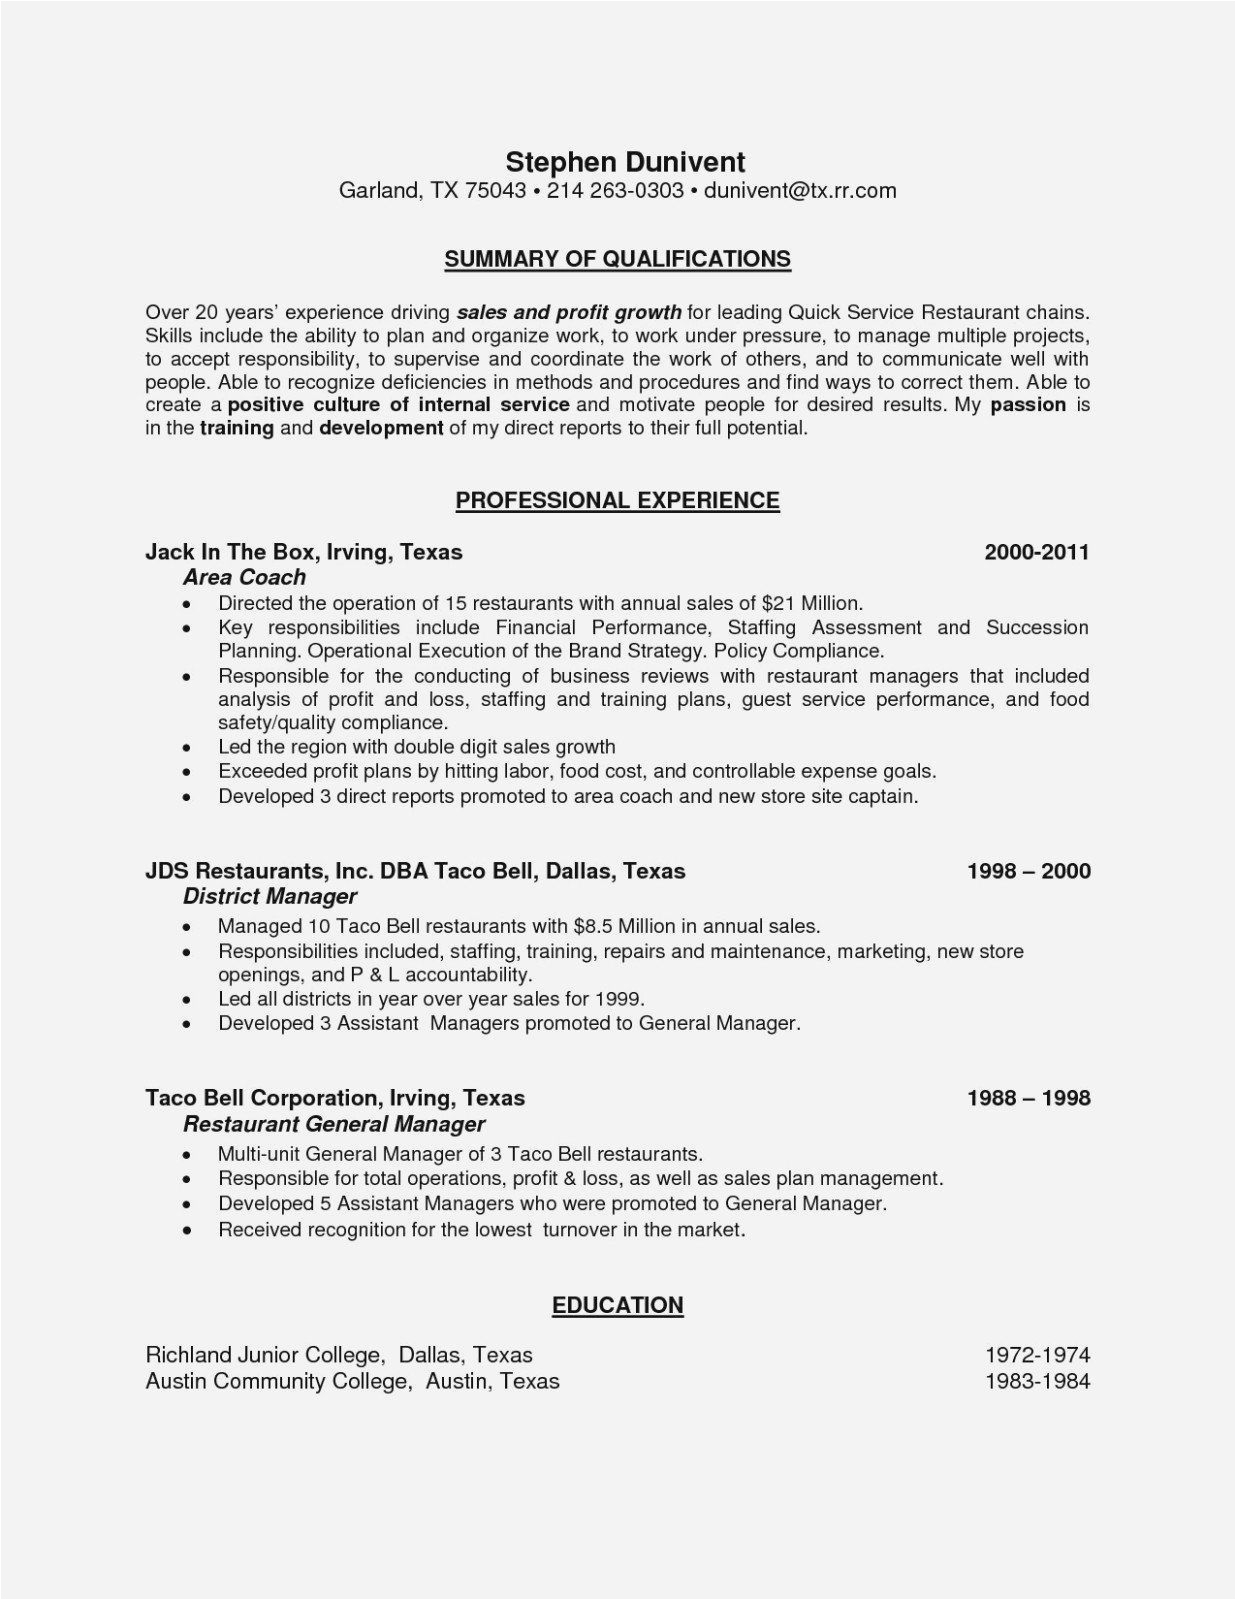 Sample Resume Objective for Internal Position Resume Objective Internal Promotion Rusemu